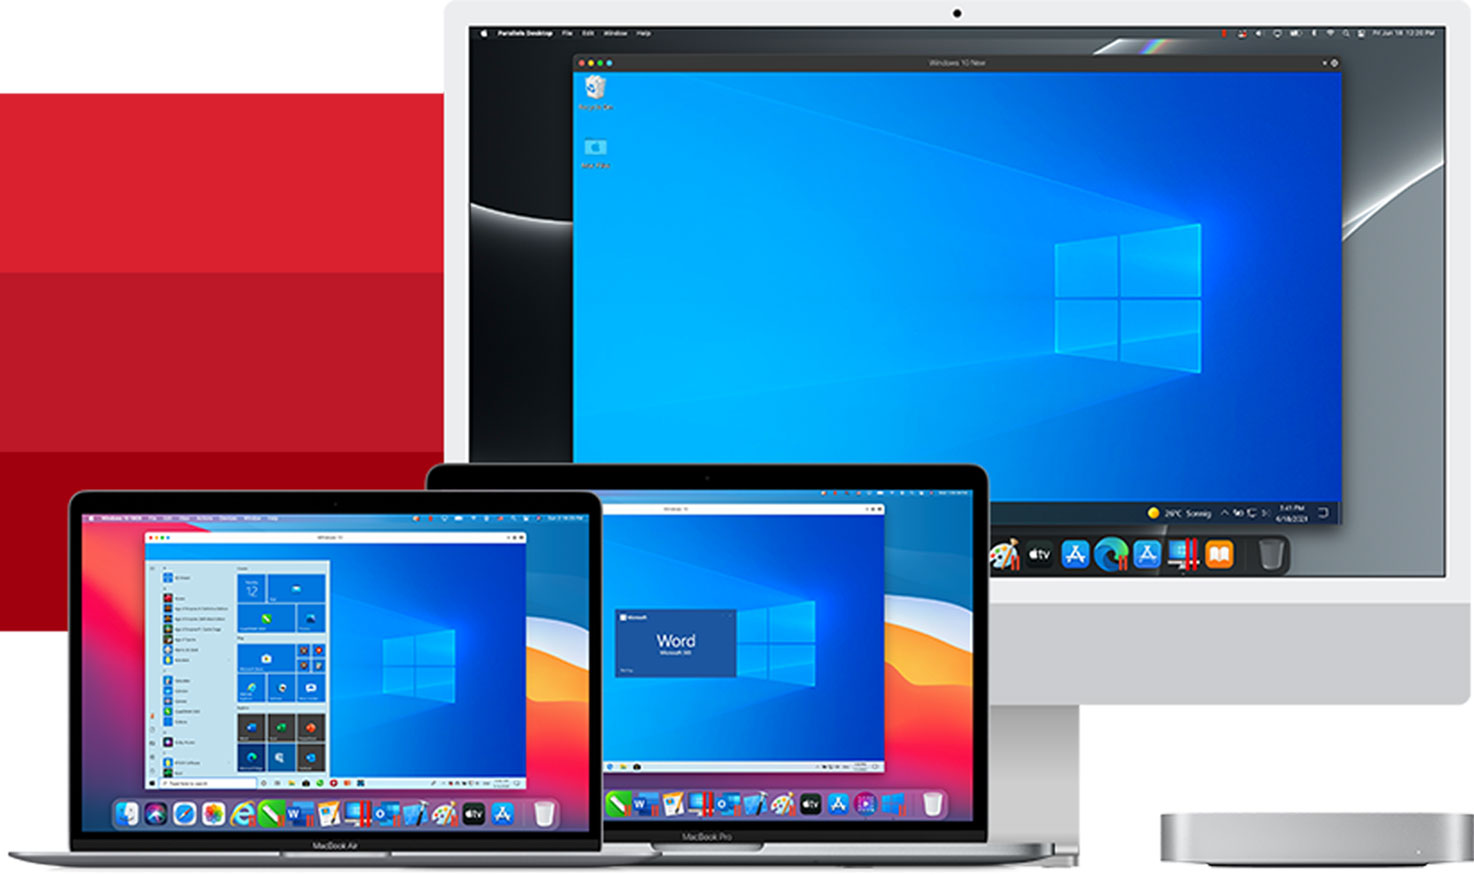 parallels desktop 11 for mac - education edition